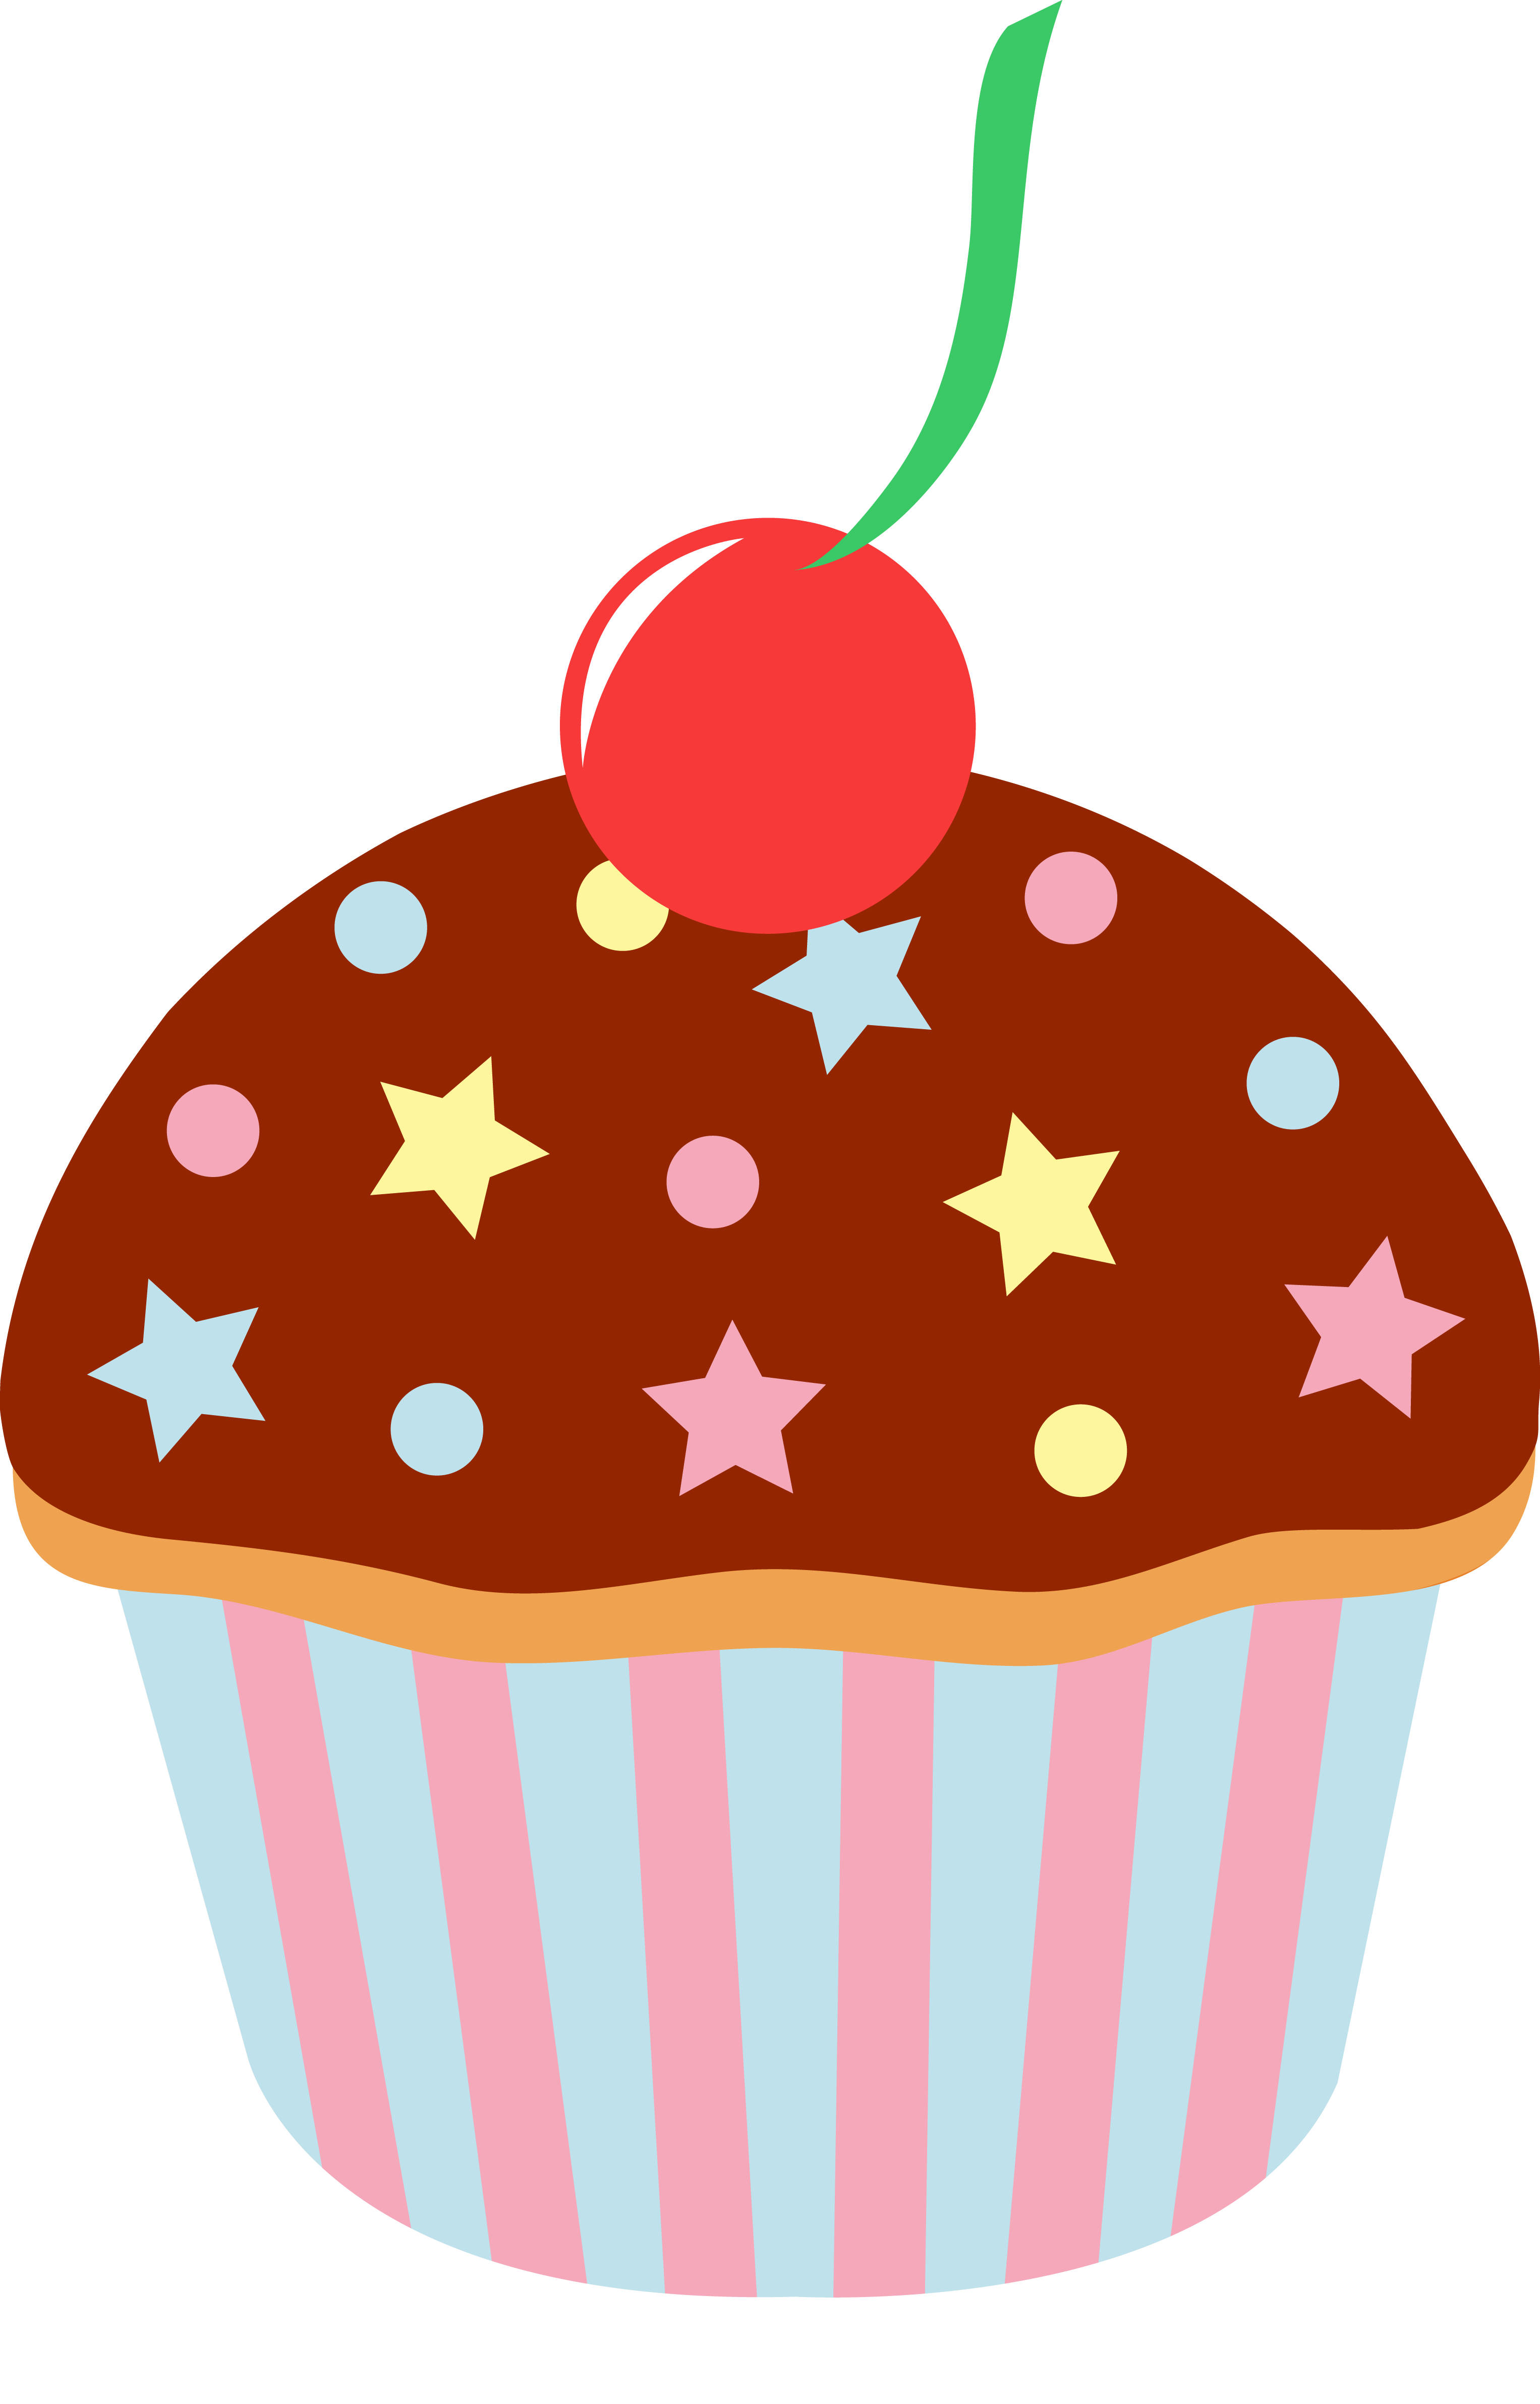 Cupcake Cartoon Images | Free Download Clip Art | Free Clip Art ...